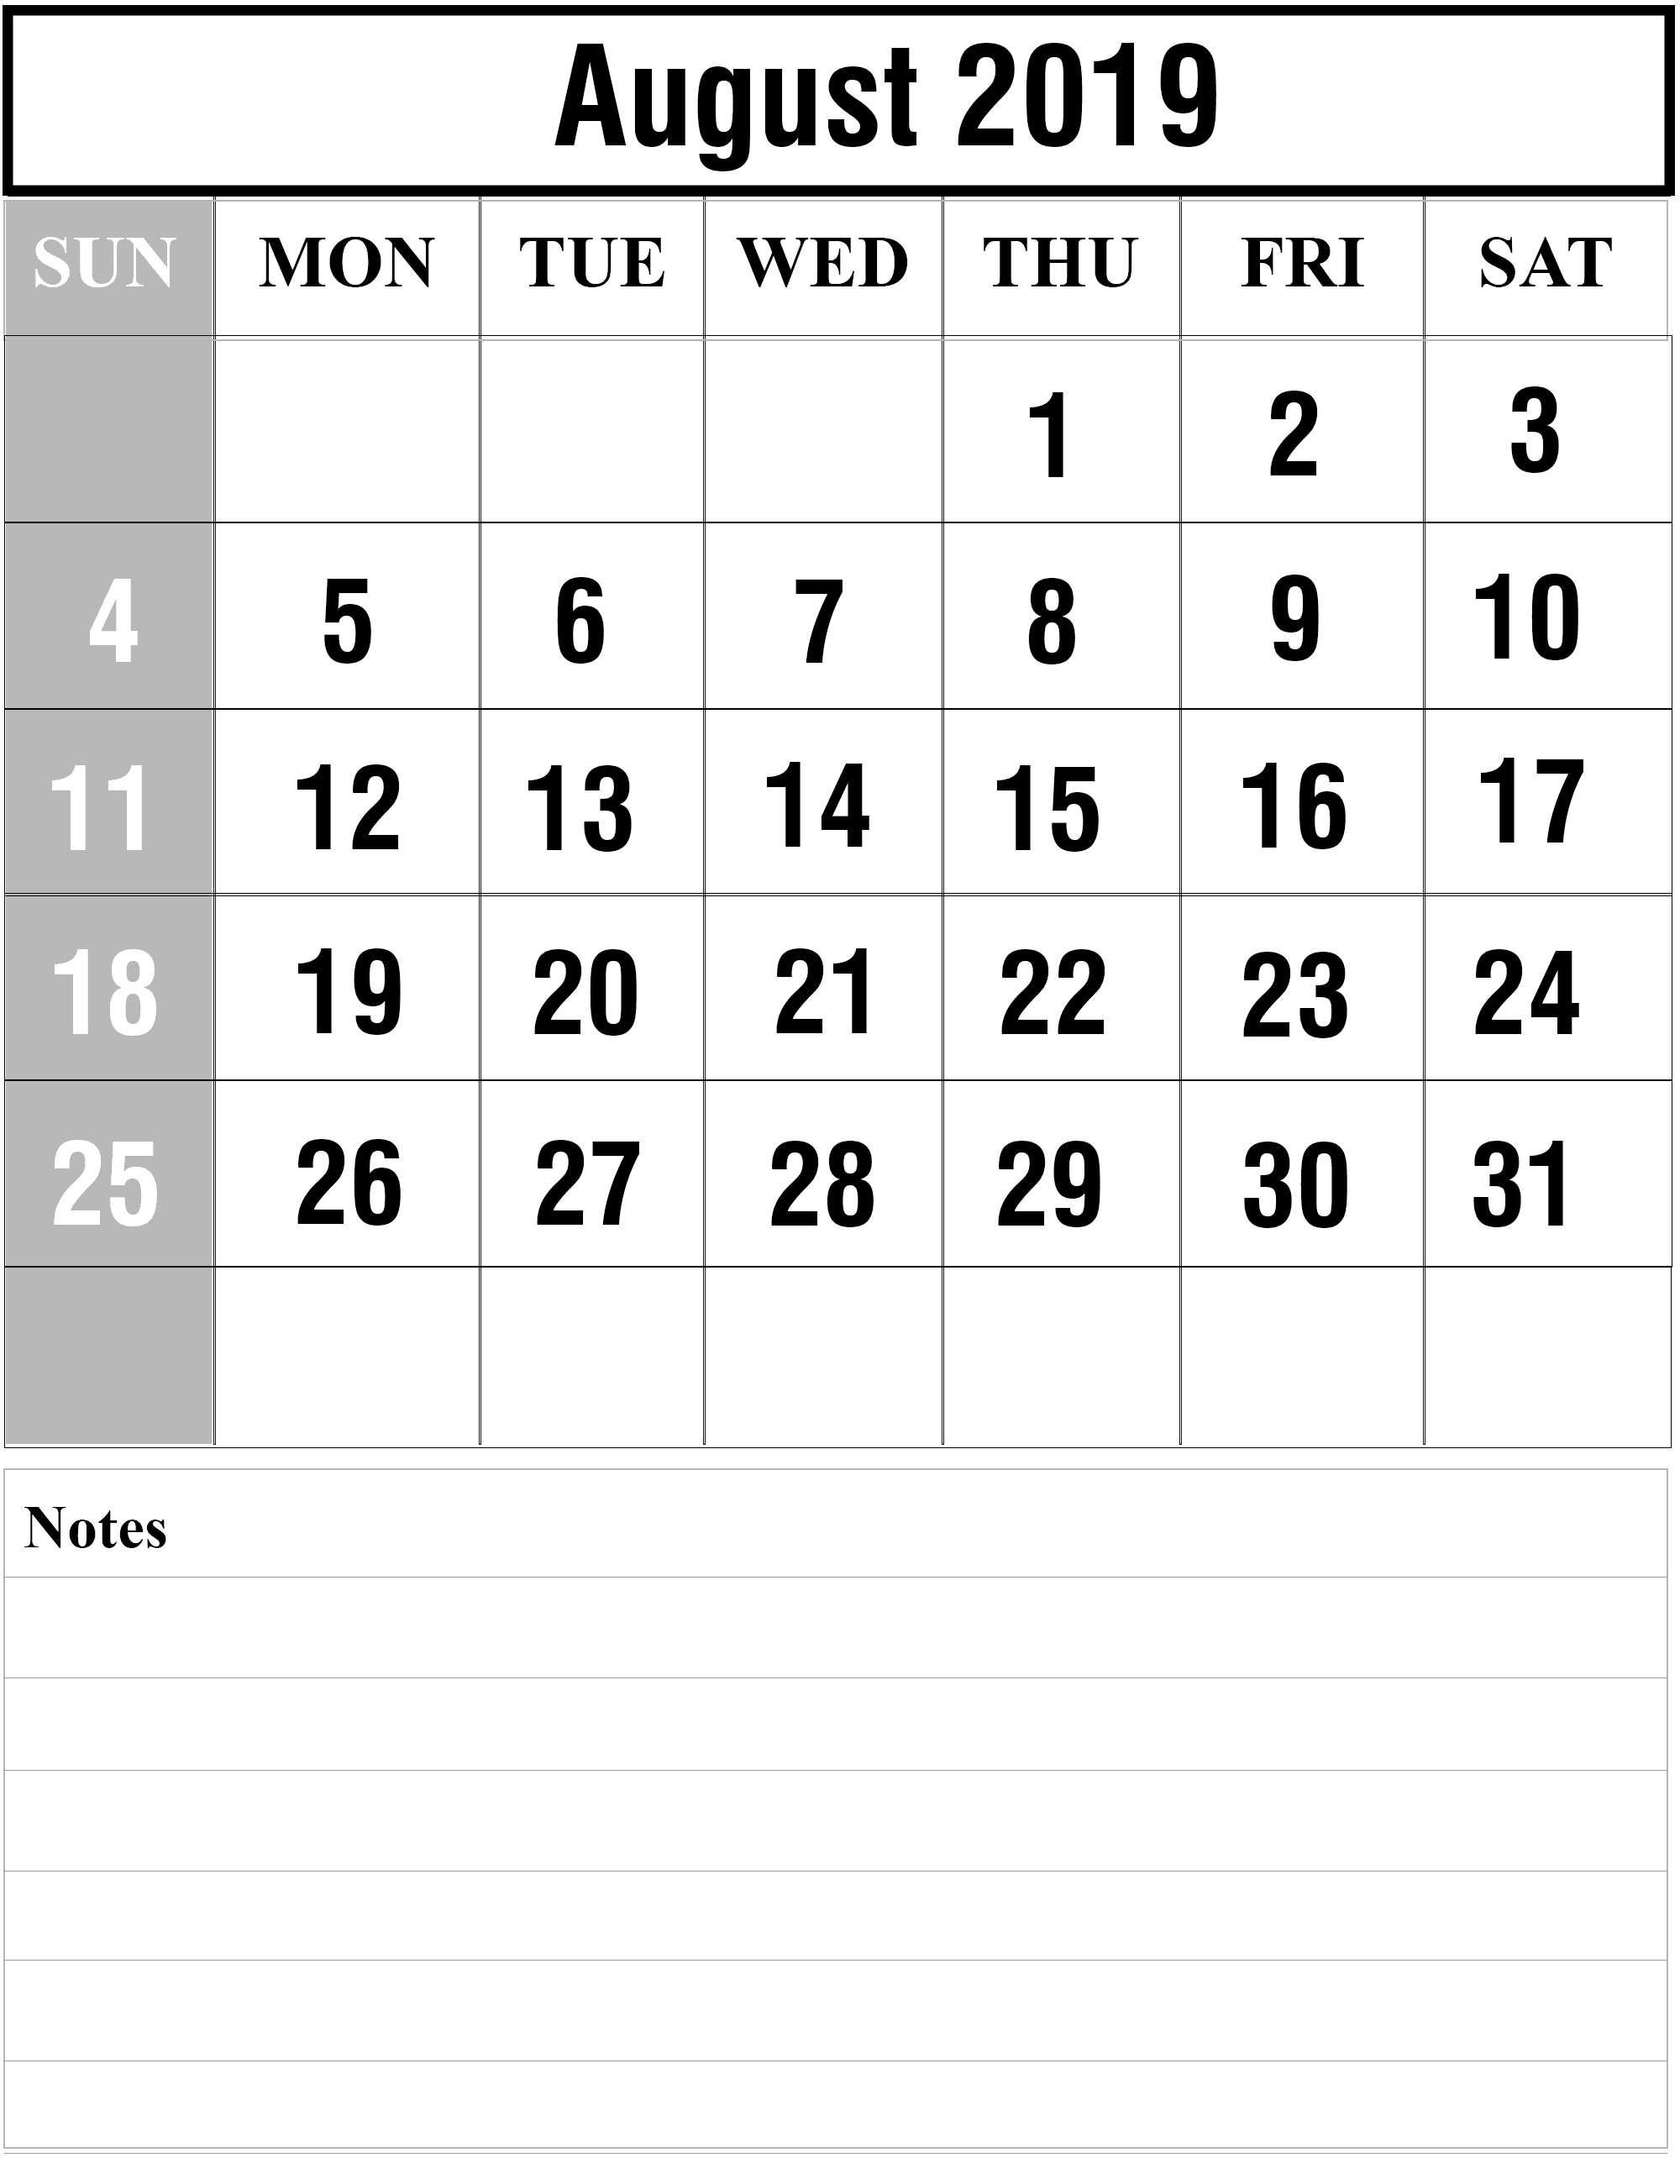 August Calendar 2019 with Holidays